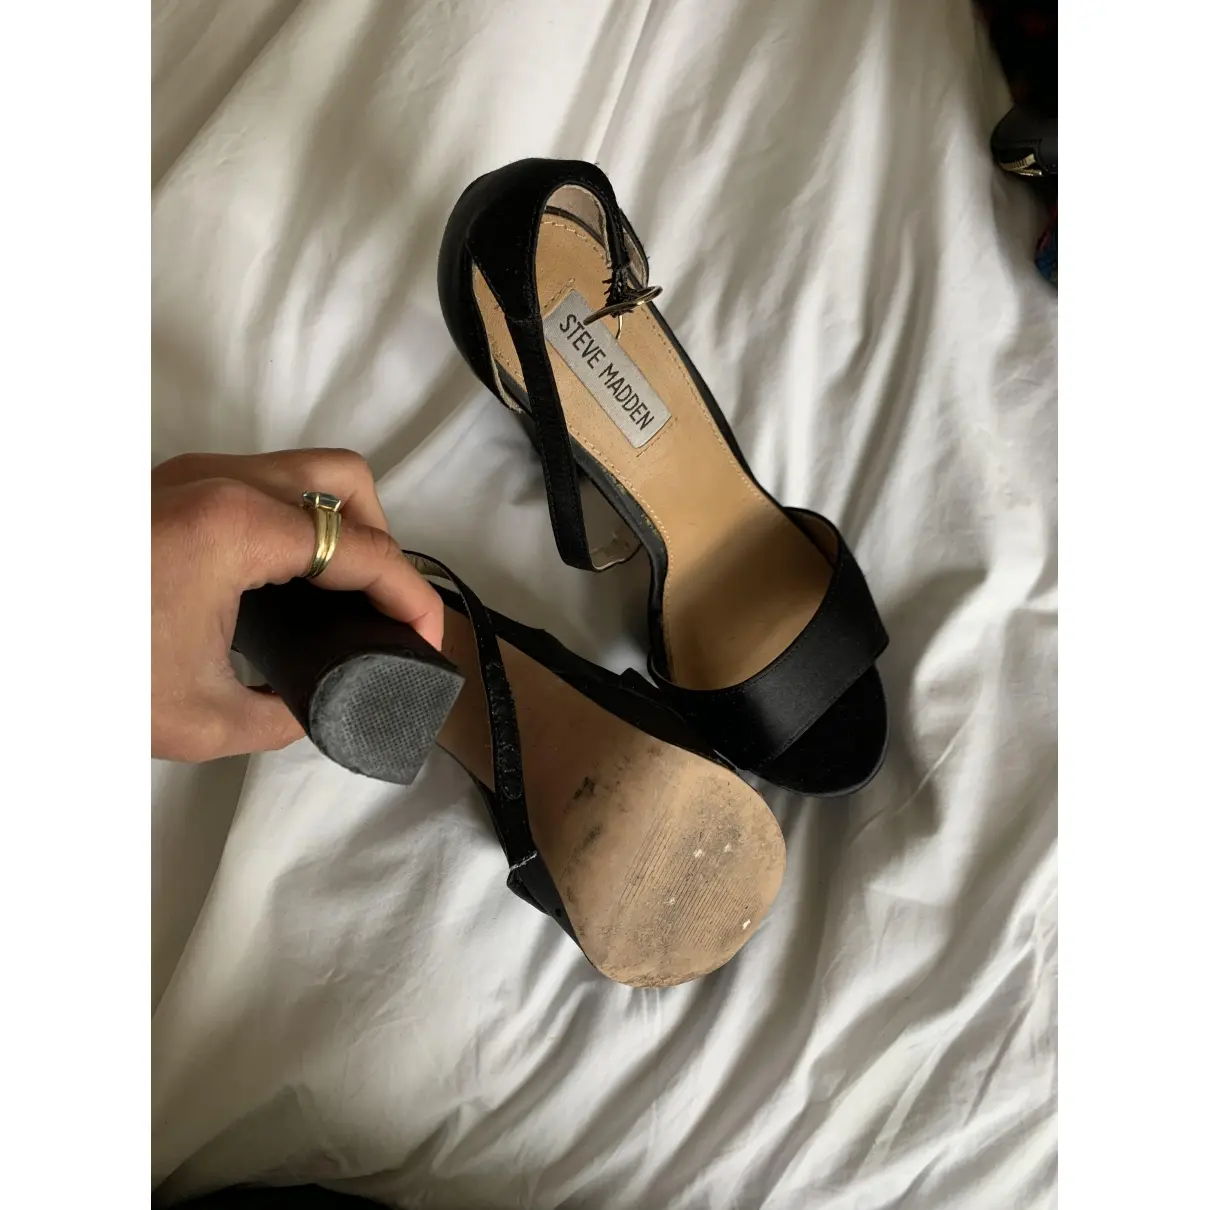 Buy Steve Madden Cloth heels online